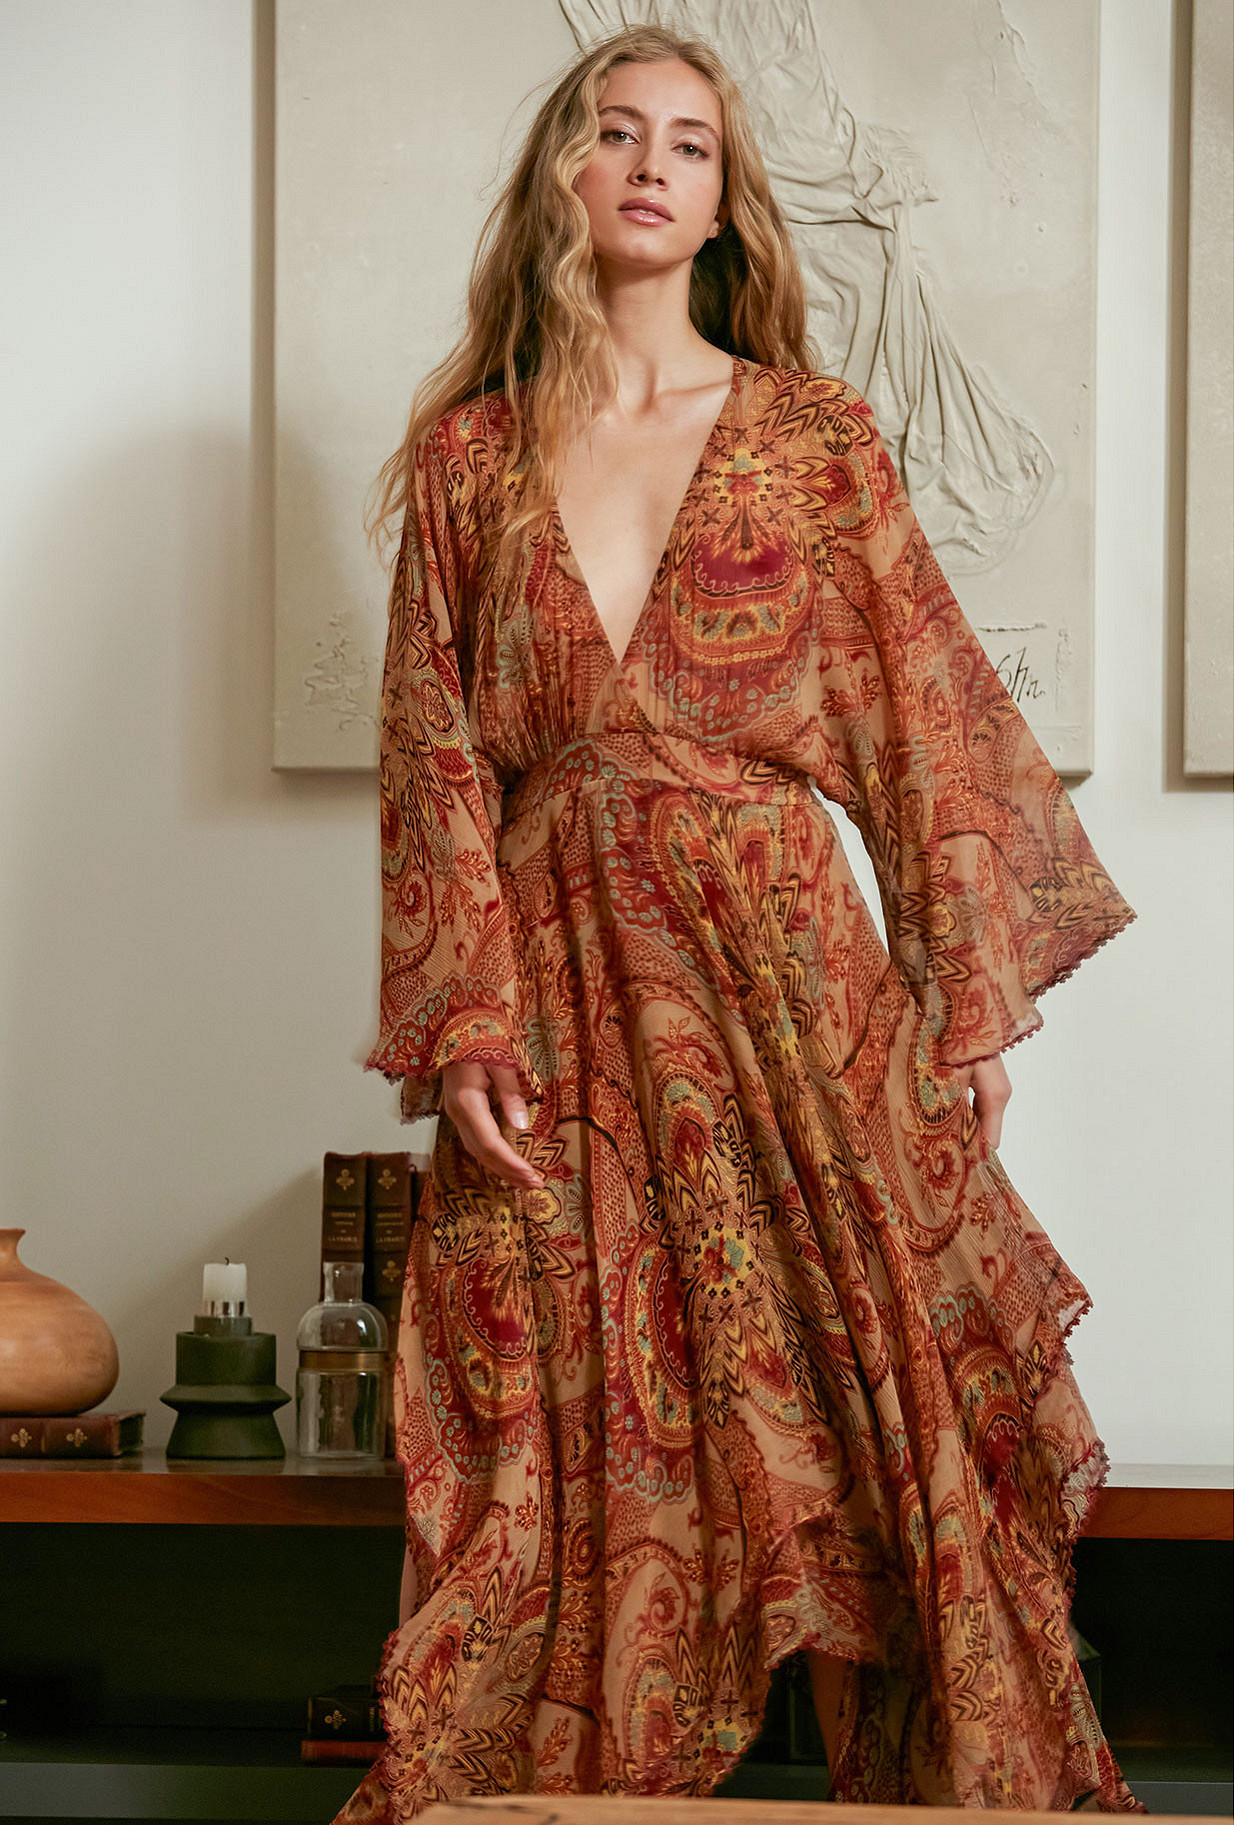 Womens winter - Floral print - Dress |Model Lauren | Online fashio...